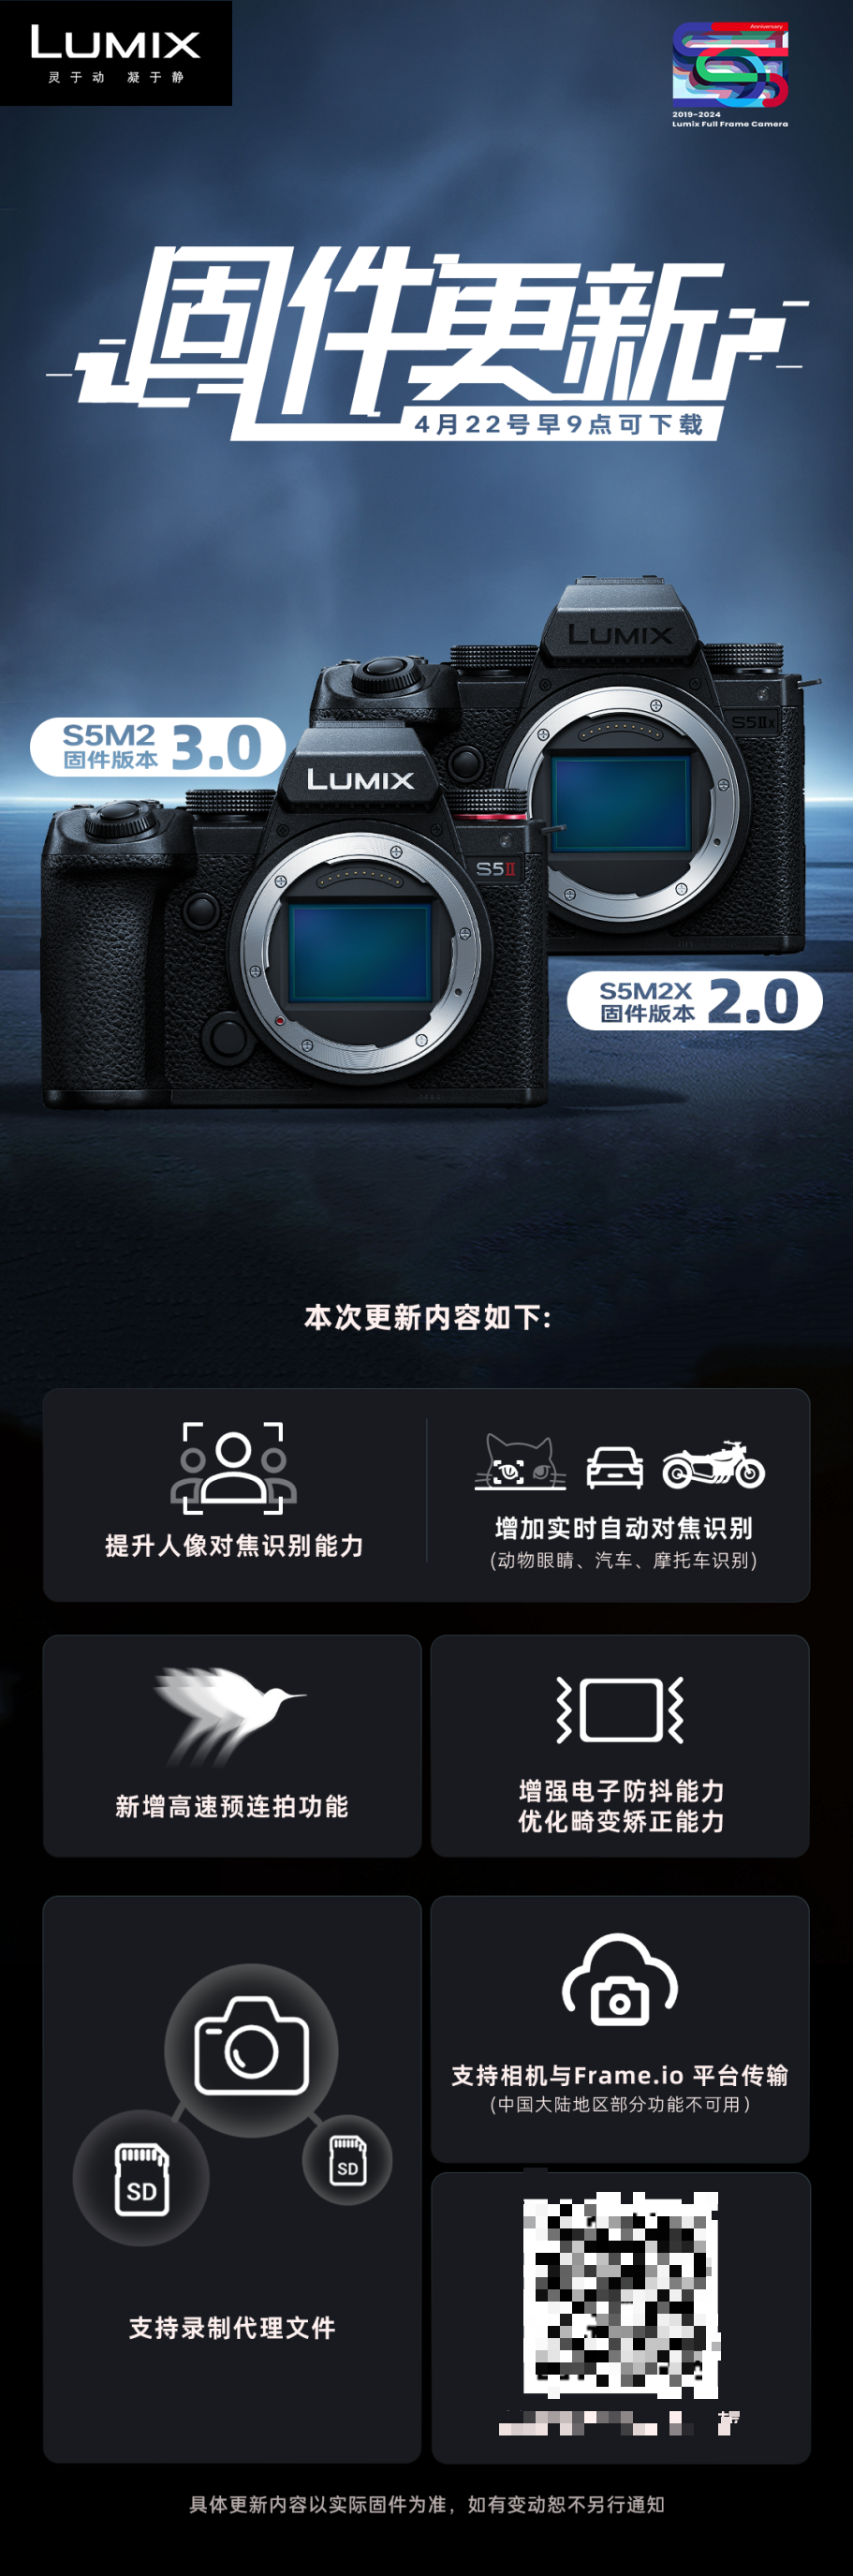 Panasonic LUMIX S5M2 camera 3.0